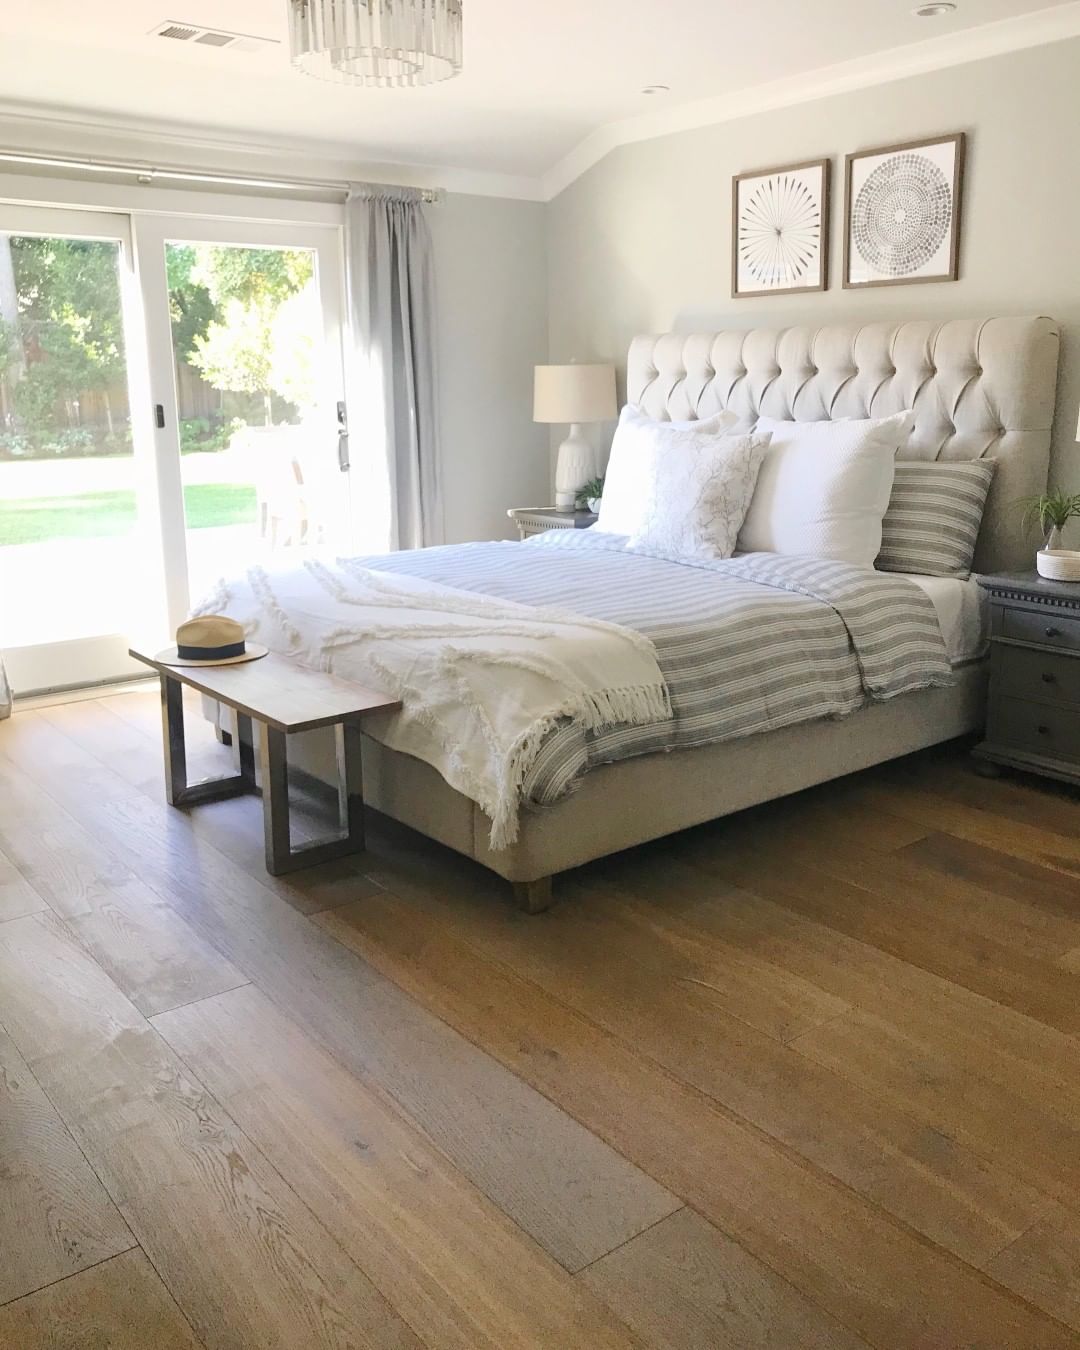 Bedroom with wood plank floors. Photo by Instagram user @monarchplank